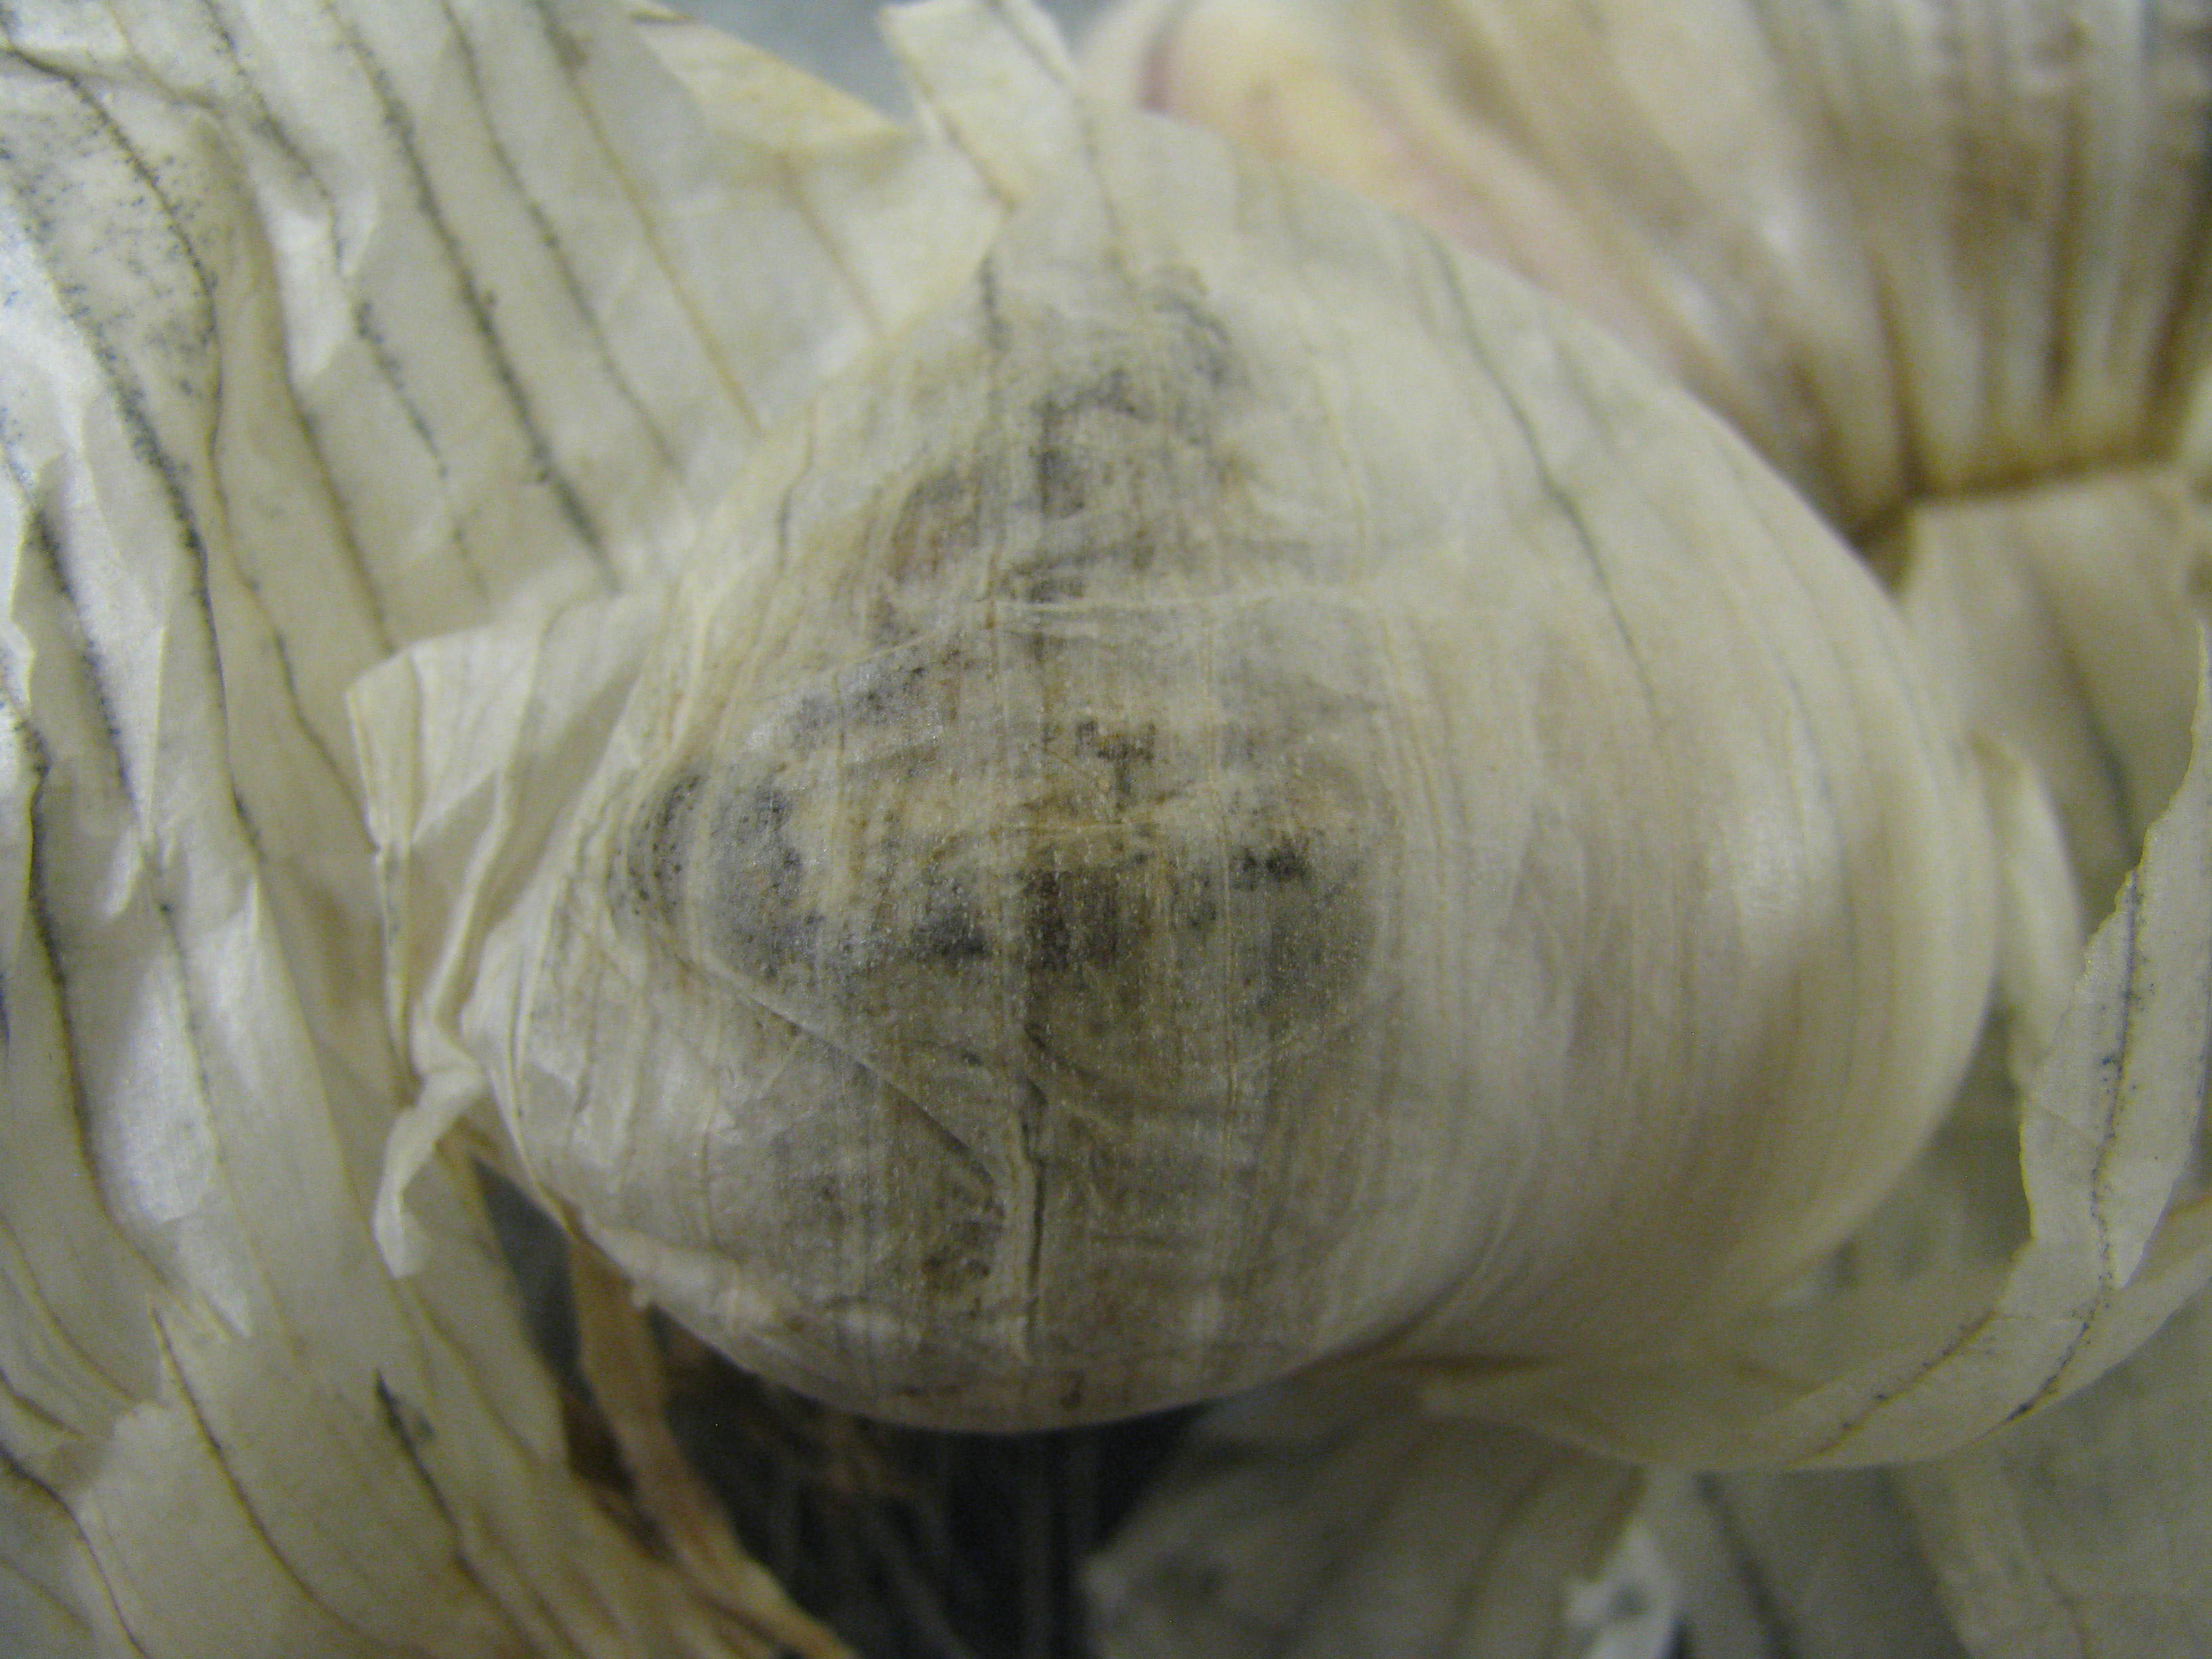 Embellisia skin blotch and bulb canker of garlic.